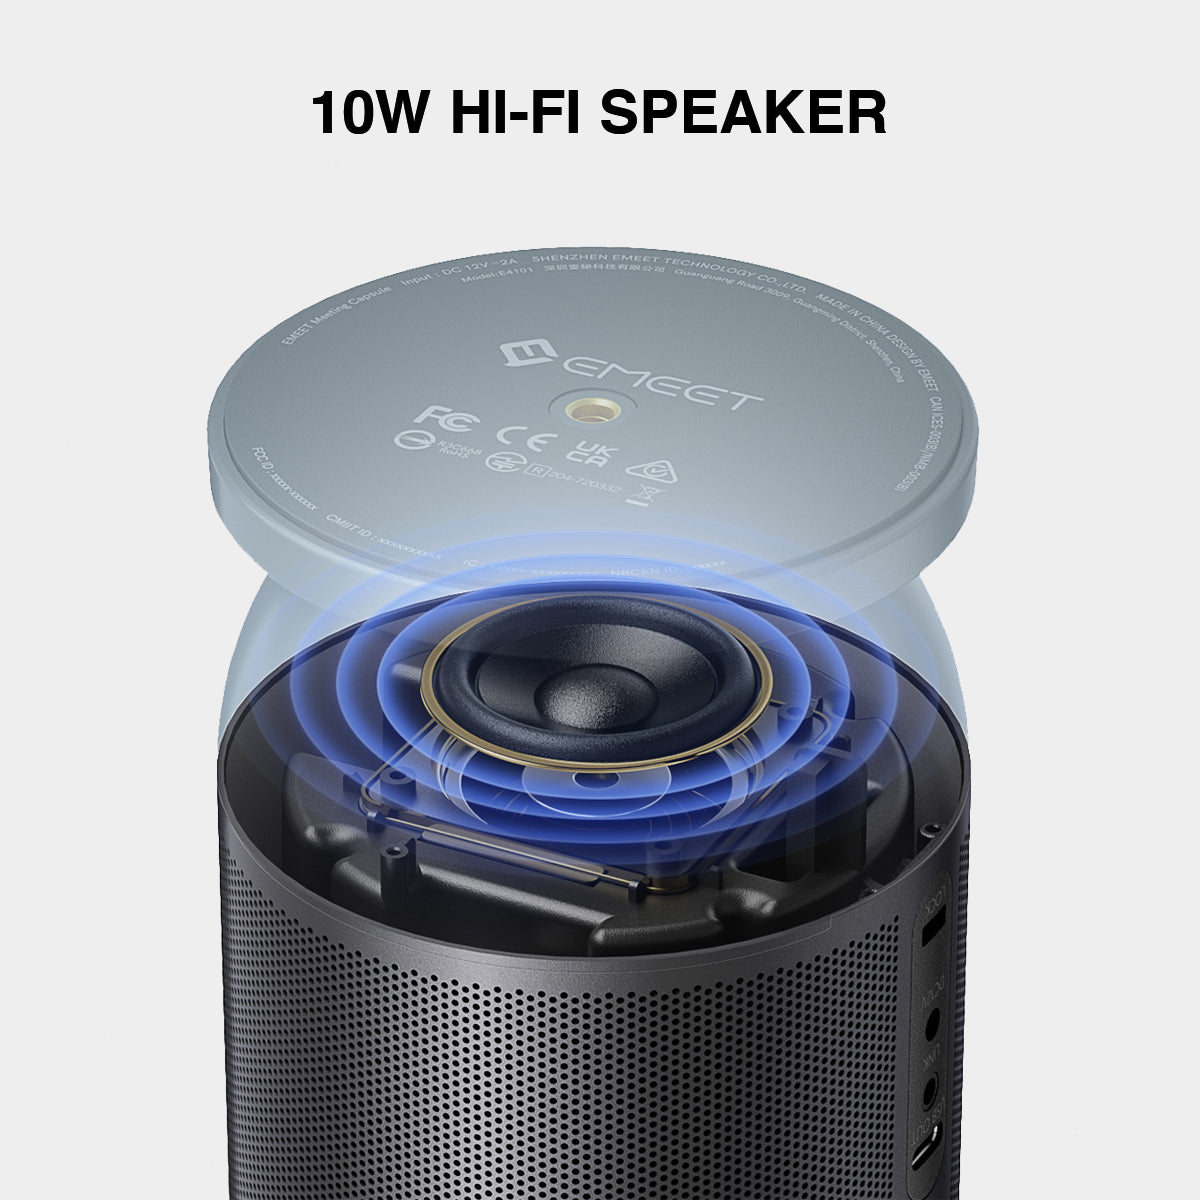 10W 90dB Speaker